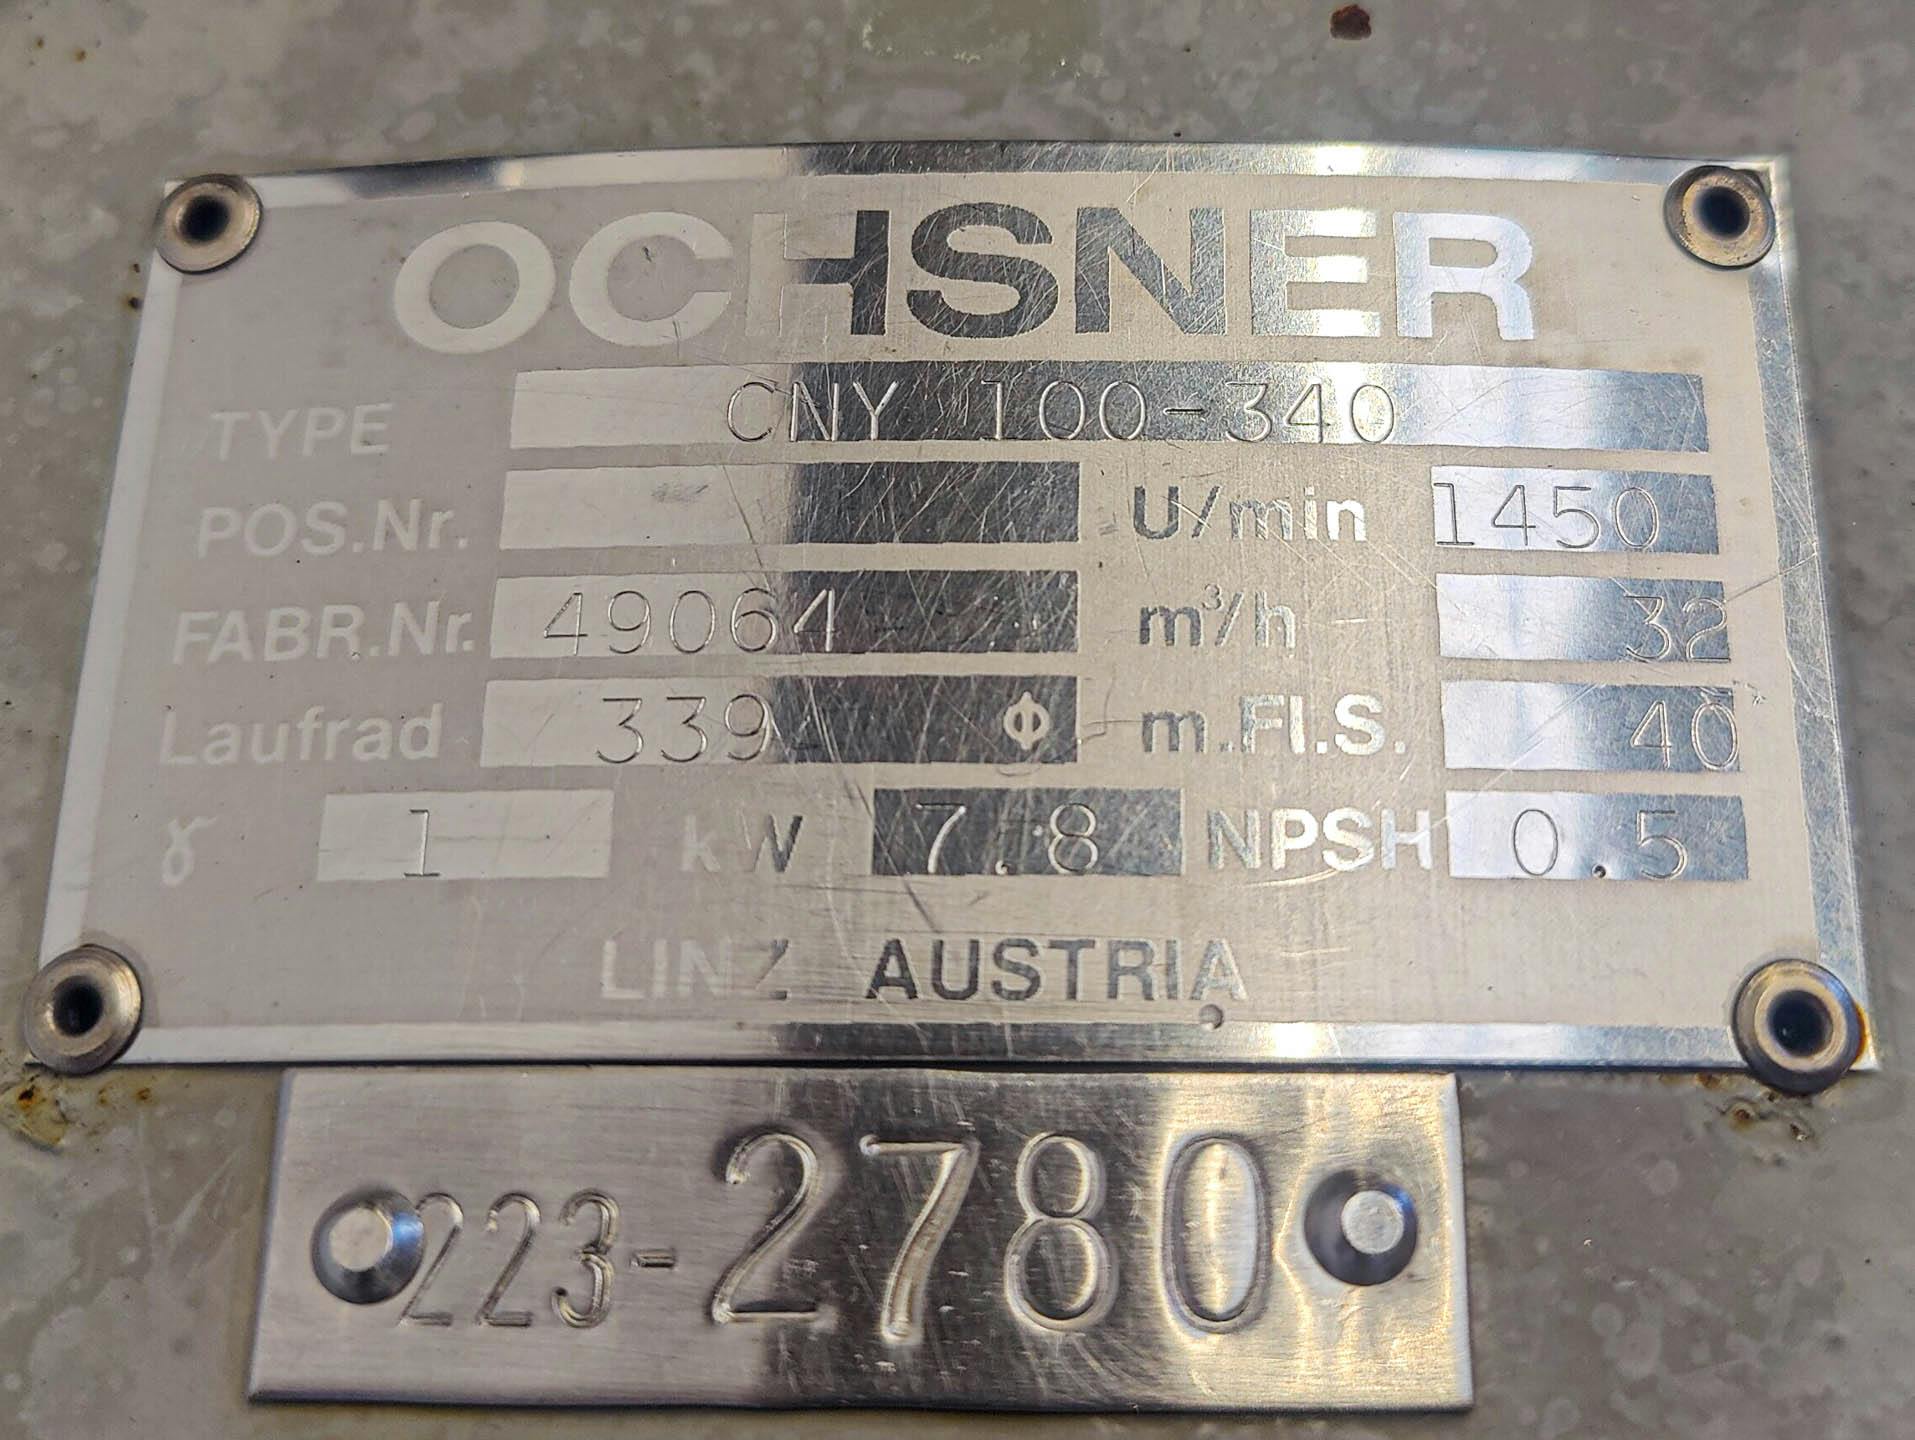 Ochsner CNY 100-340 - Центробежный насос - image 6